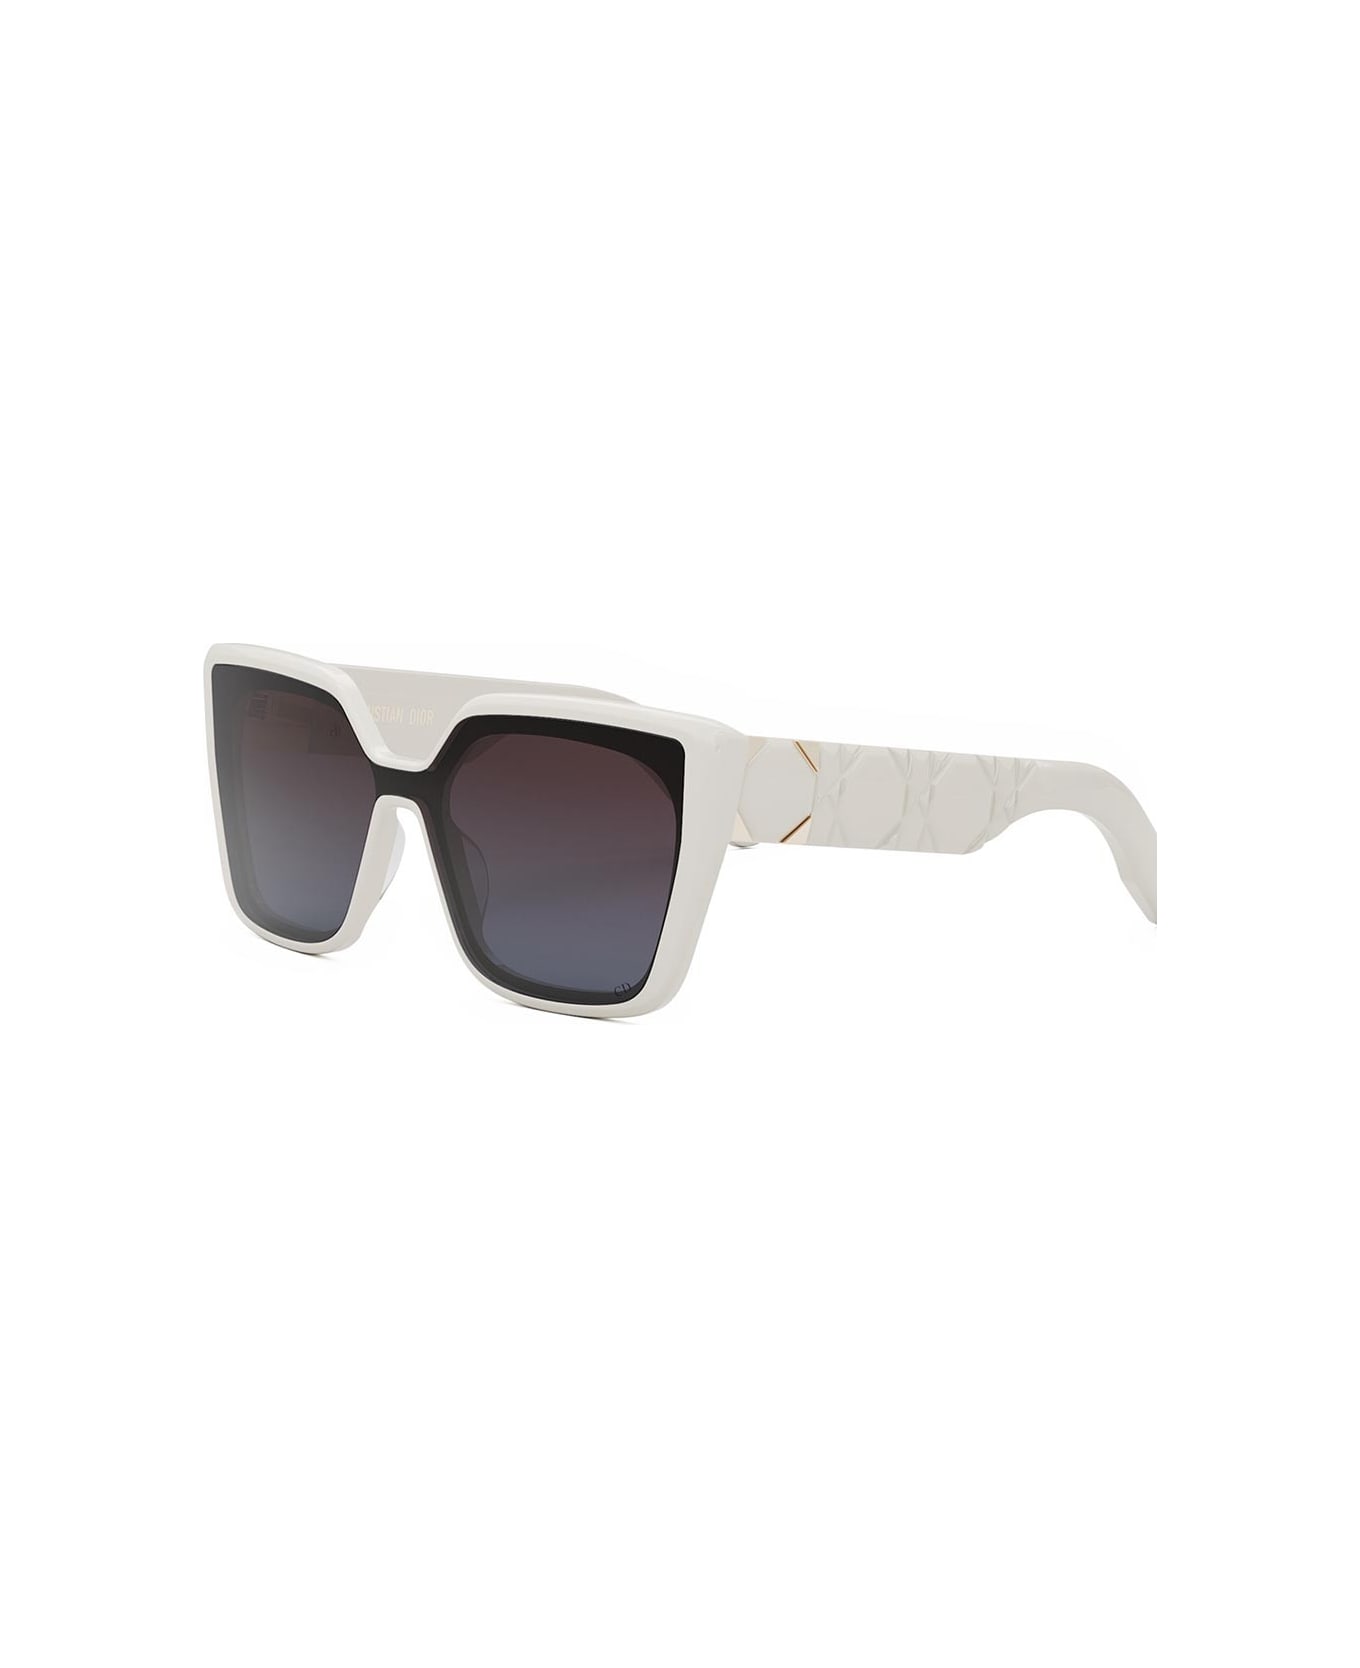 Dior Eyewear Sunglasses - Bianco/Bordeaux sfumato サングラス